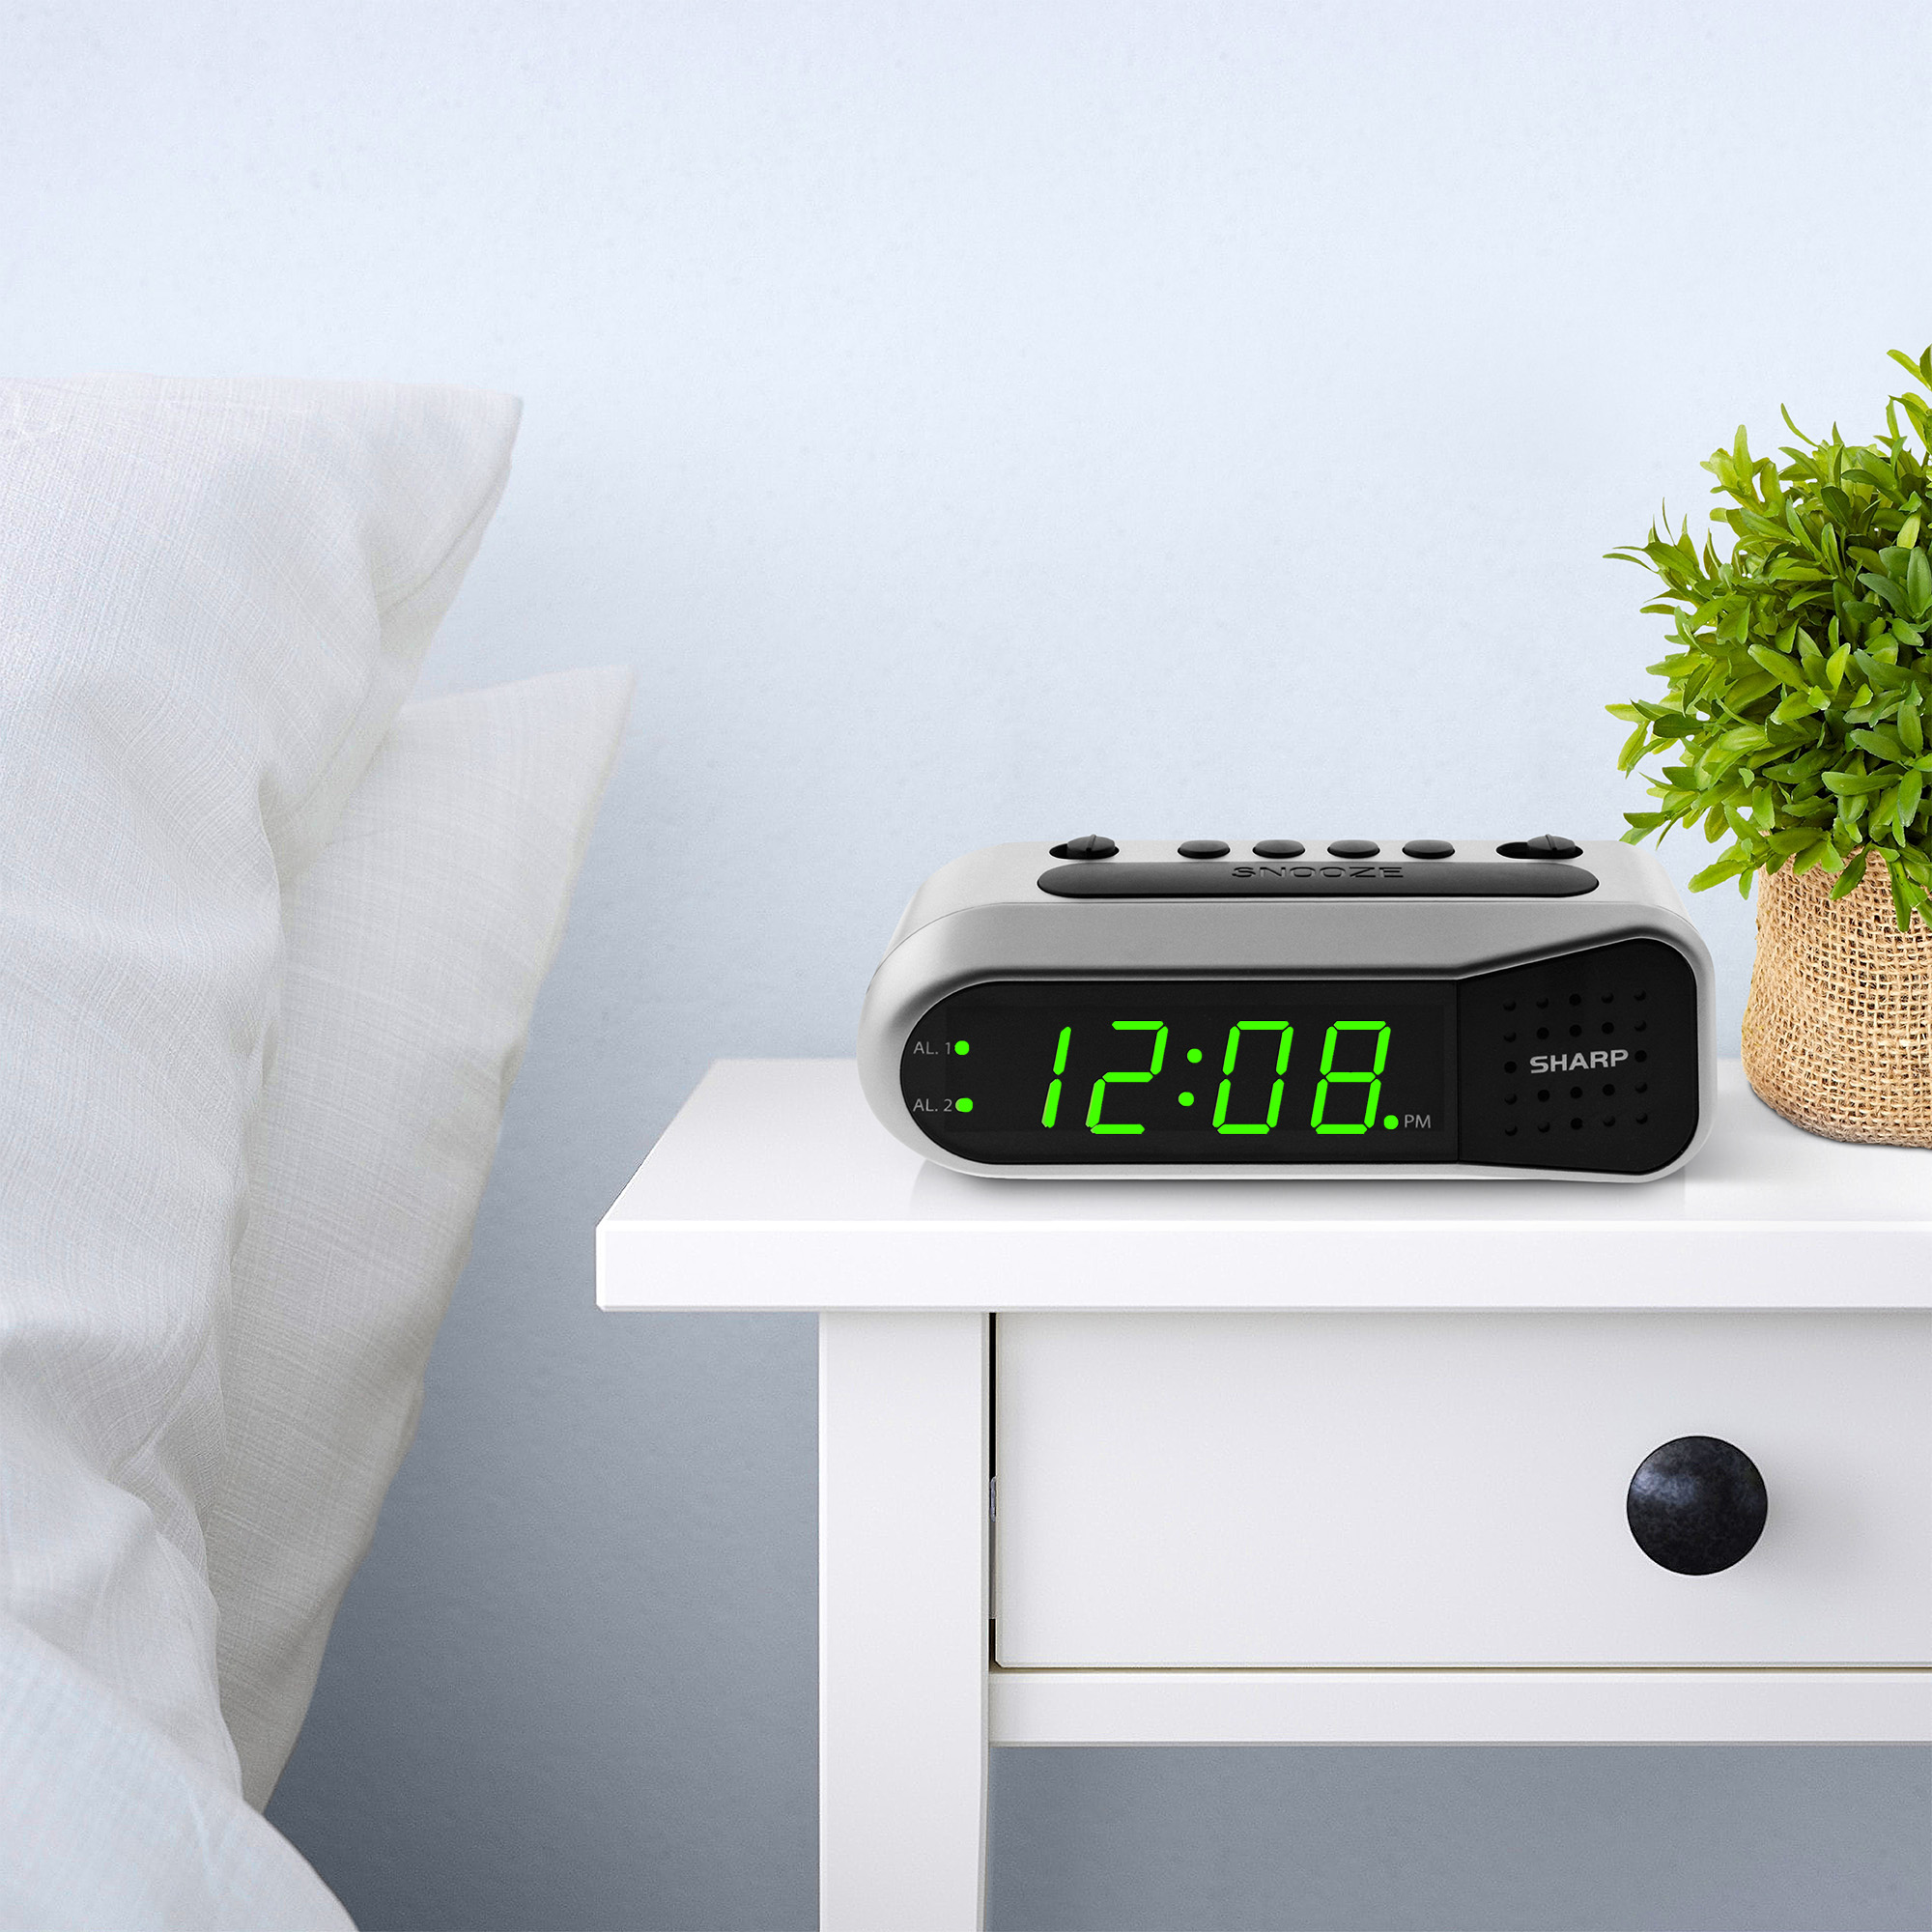 SHARP Digital Dual Alarm Clock, Silver with Green LED Display, Ascending Alarm - image 3 of 6